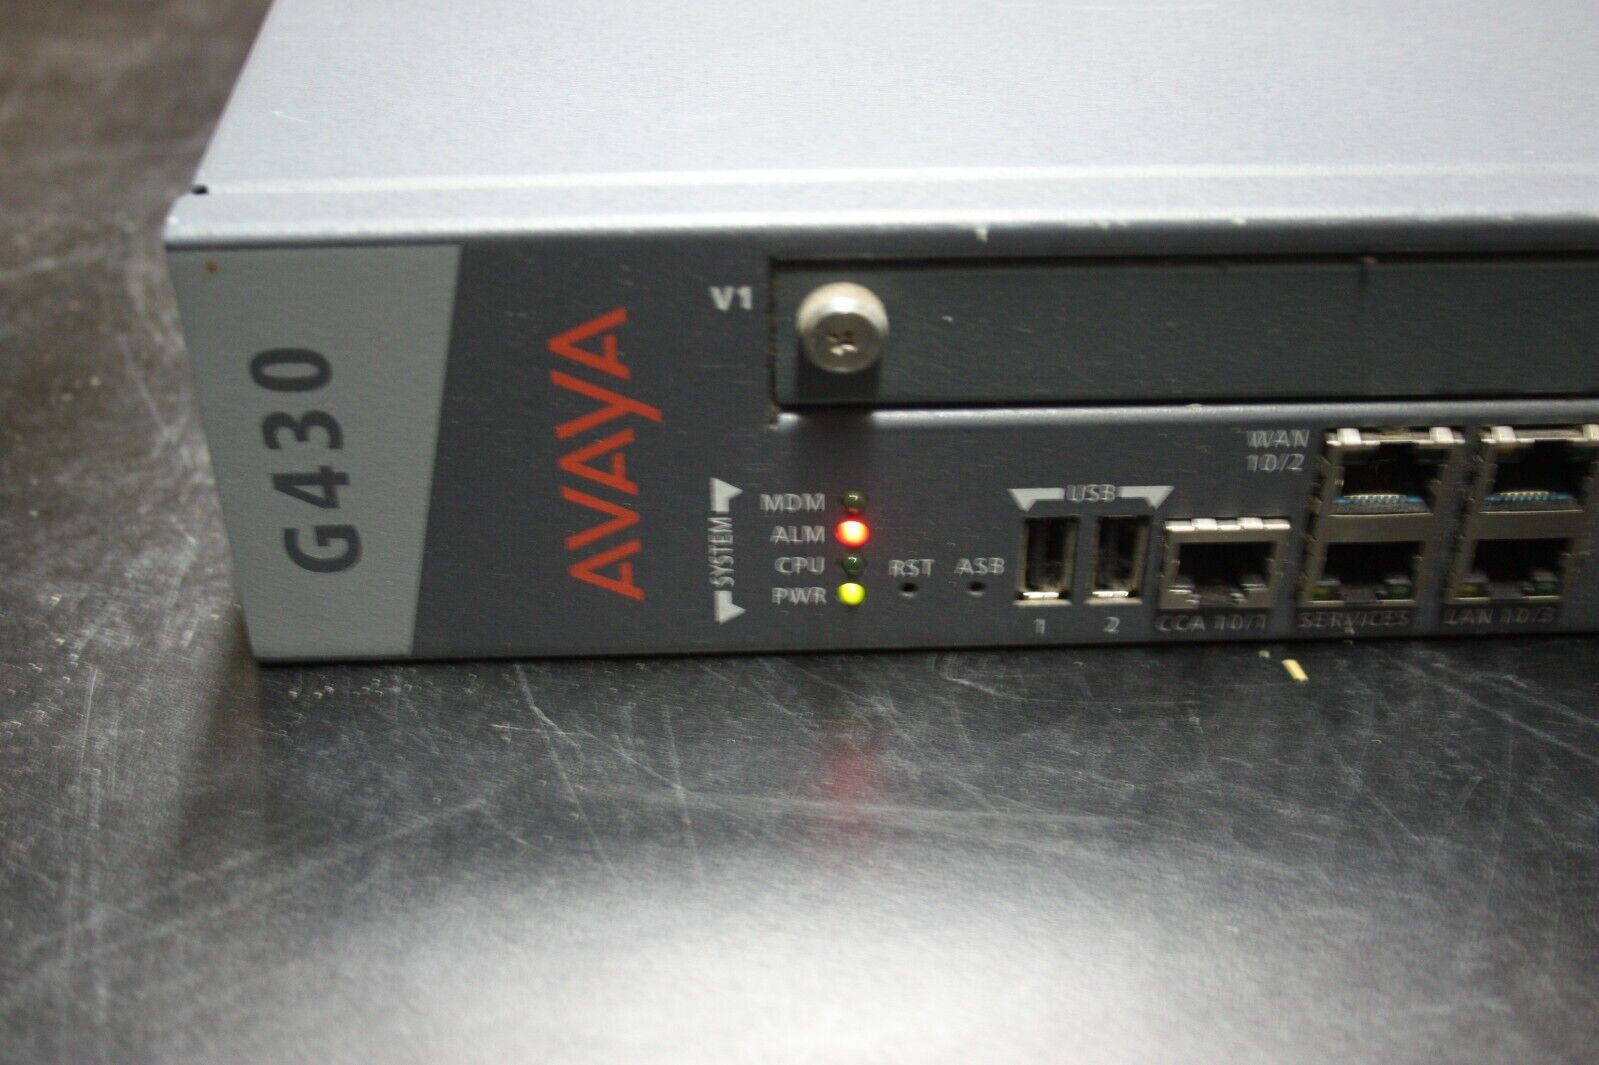 2x Avaya G430 w power cables